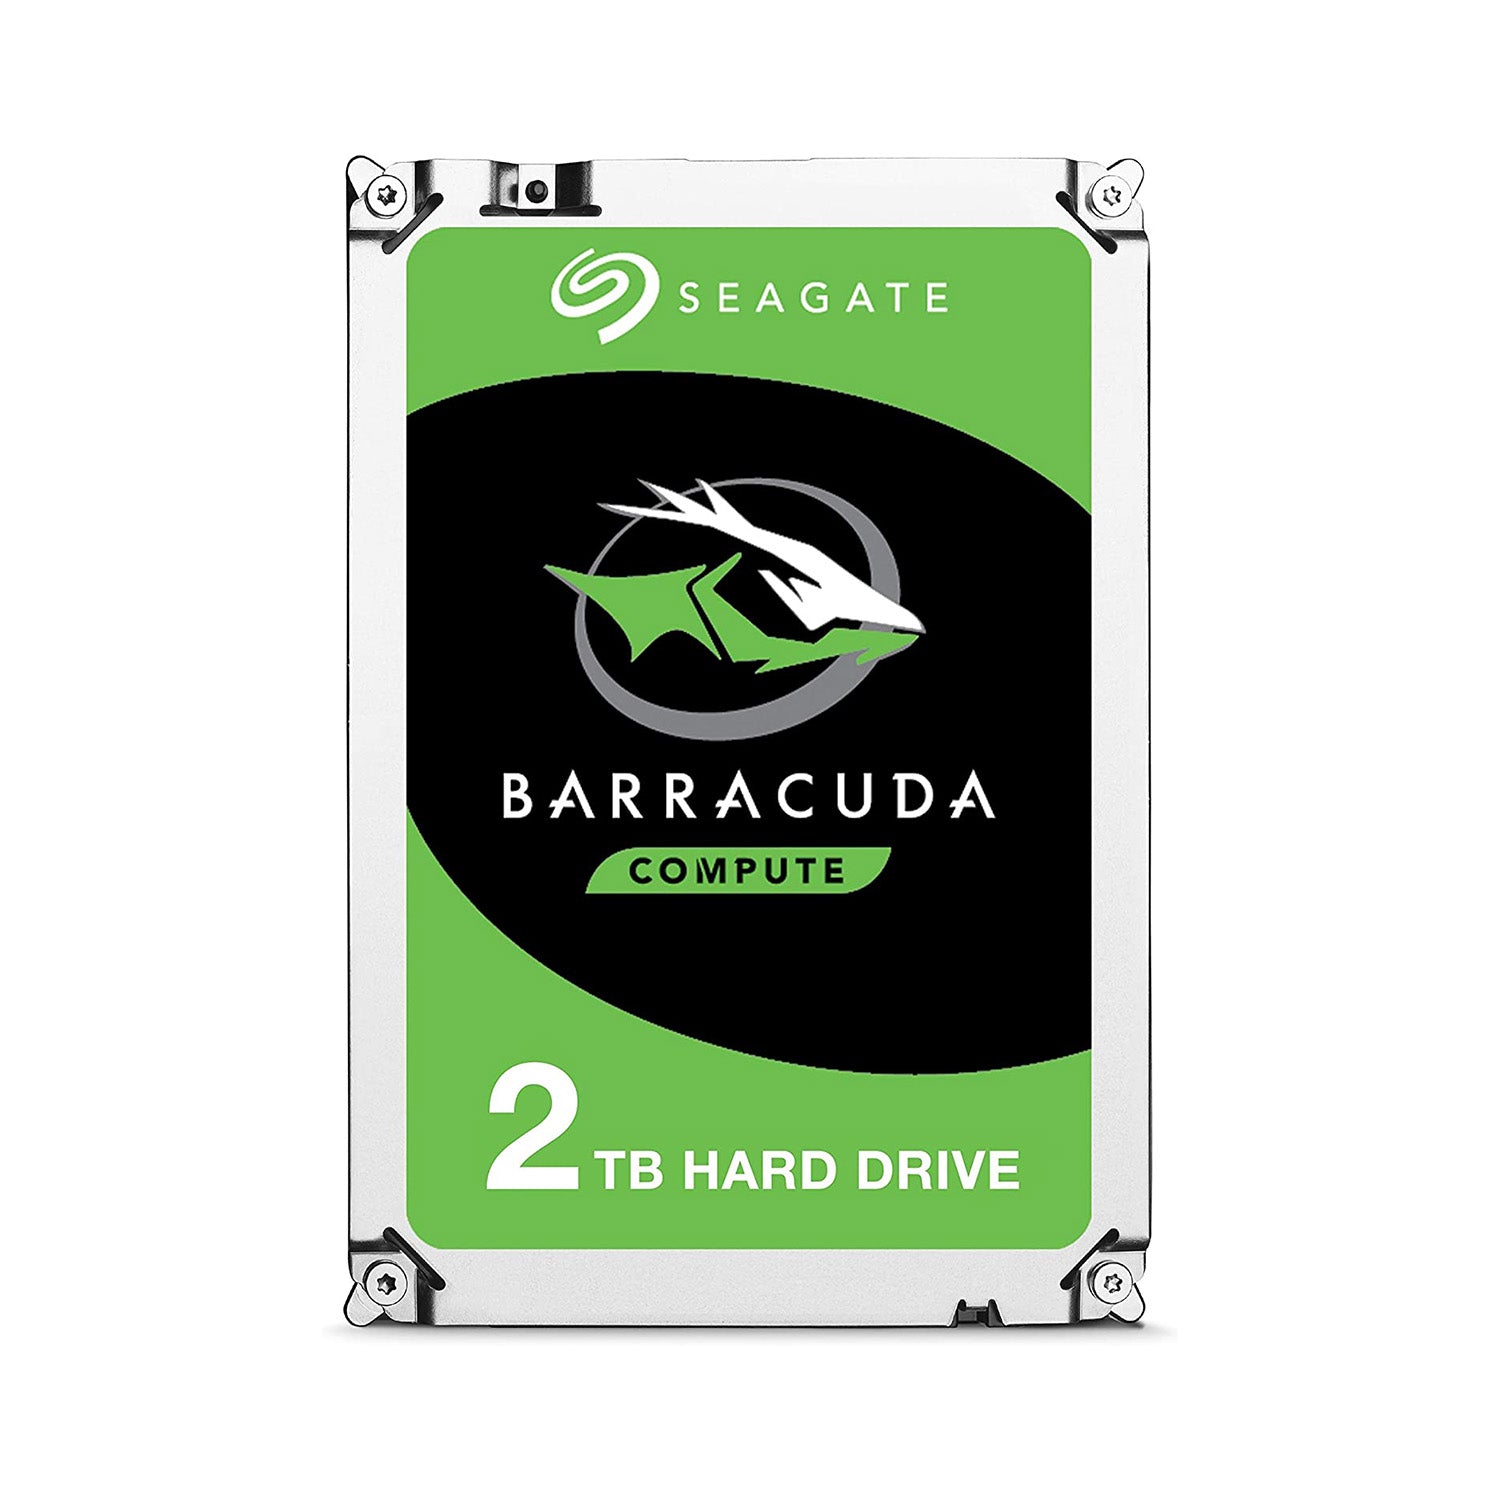 HD SEAGATE 2 TB BARRACUDA SATA III